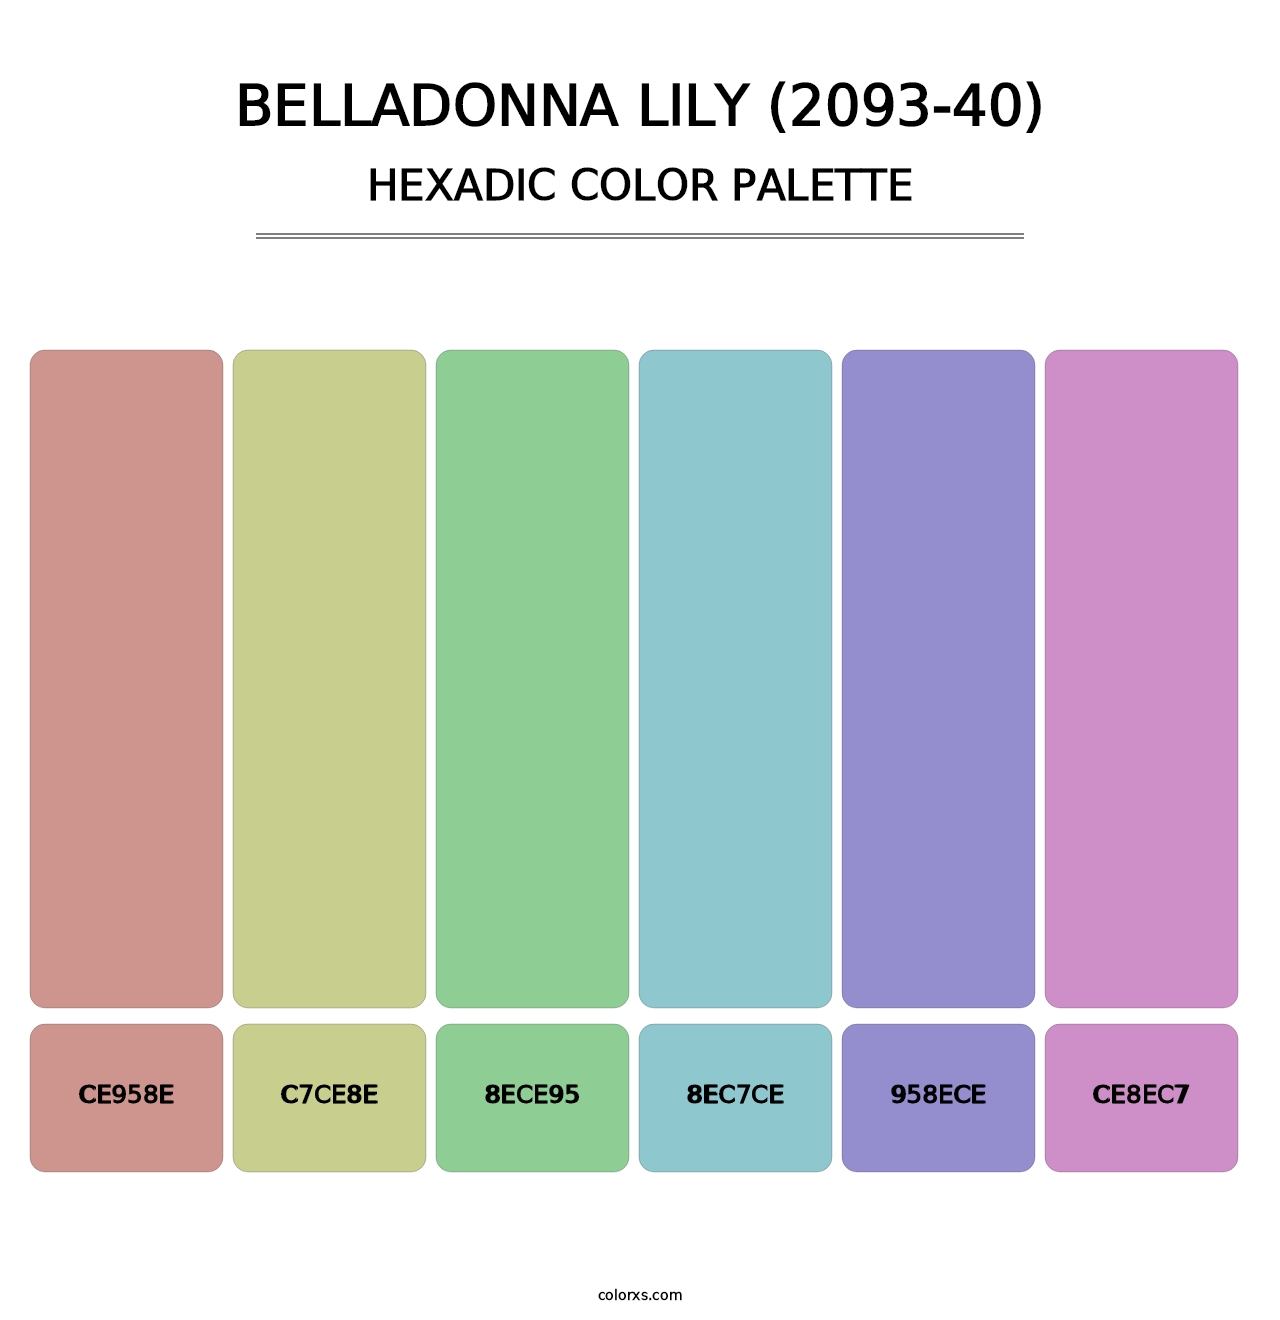 Belladonna Lily (2093-40) - Hexadic Color Palette